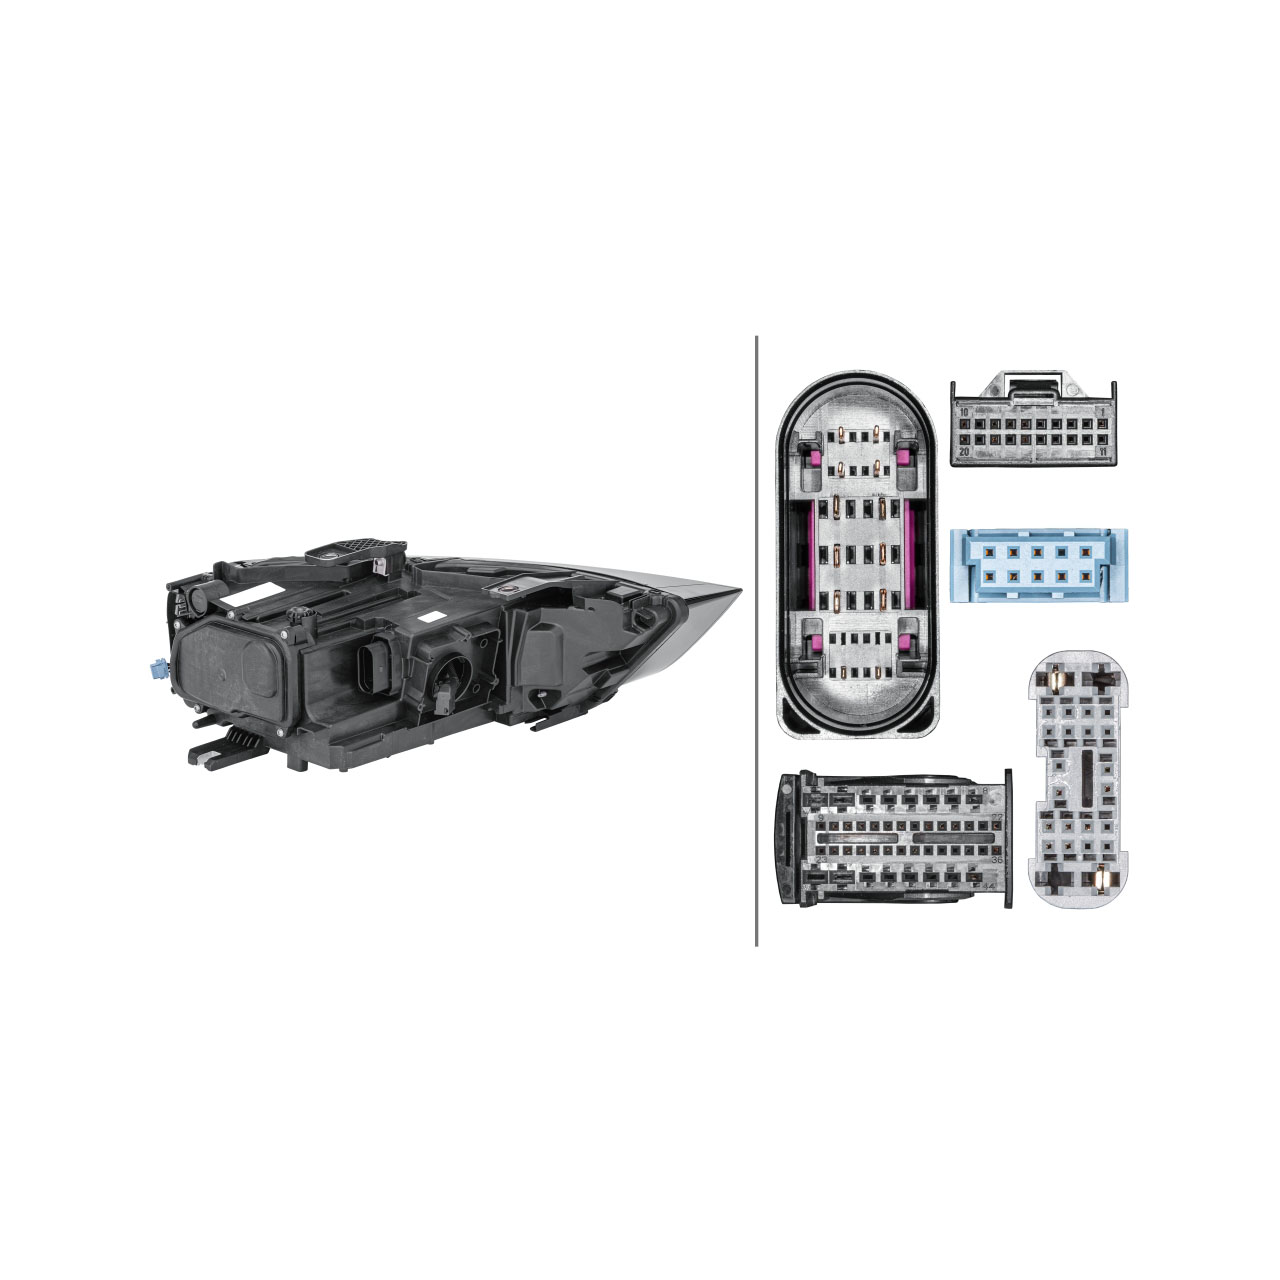 HELLA 1EX354840071 LED Scheinwerfer AUDI Q3 RSQ3 (8U) ab 11.2014 links 8U0941773